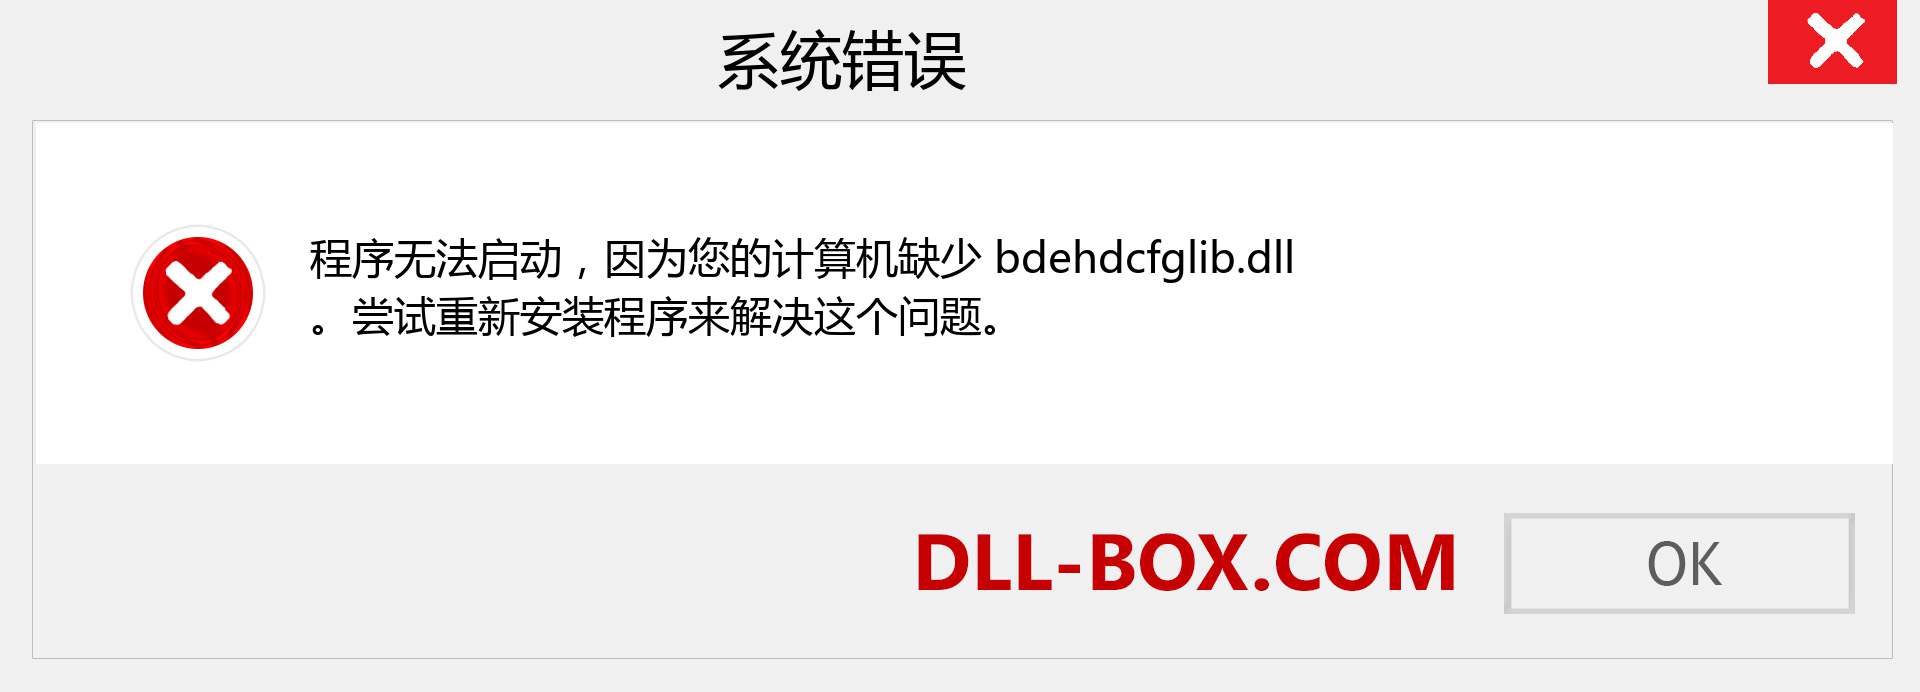 bdehdcfglib.dll 文件丢失？。 适用于 Windows 7、8、10 的下载 - 修复 Windows、照片、图像上的 bdehdcfglib dll 丢失错误